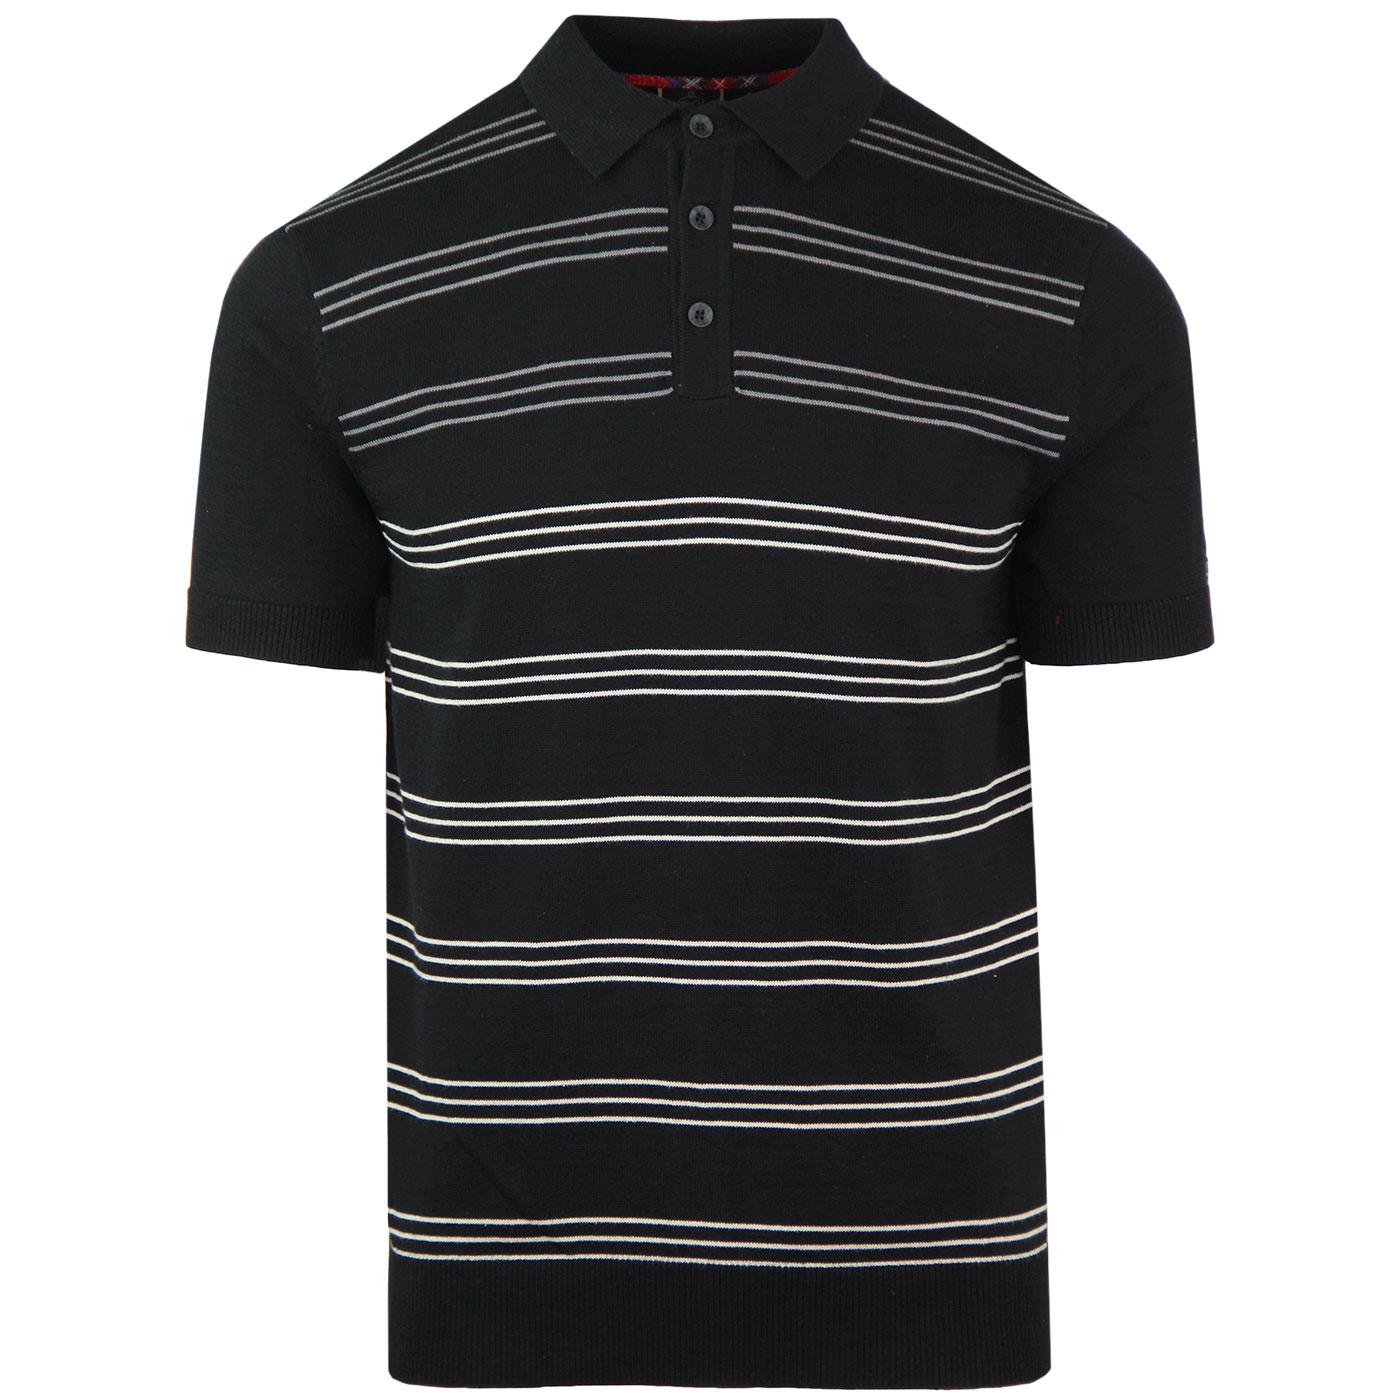 Penge MERC Retro Mod Stripe Knit Polo Shirt BLACK